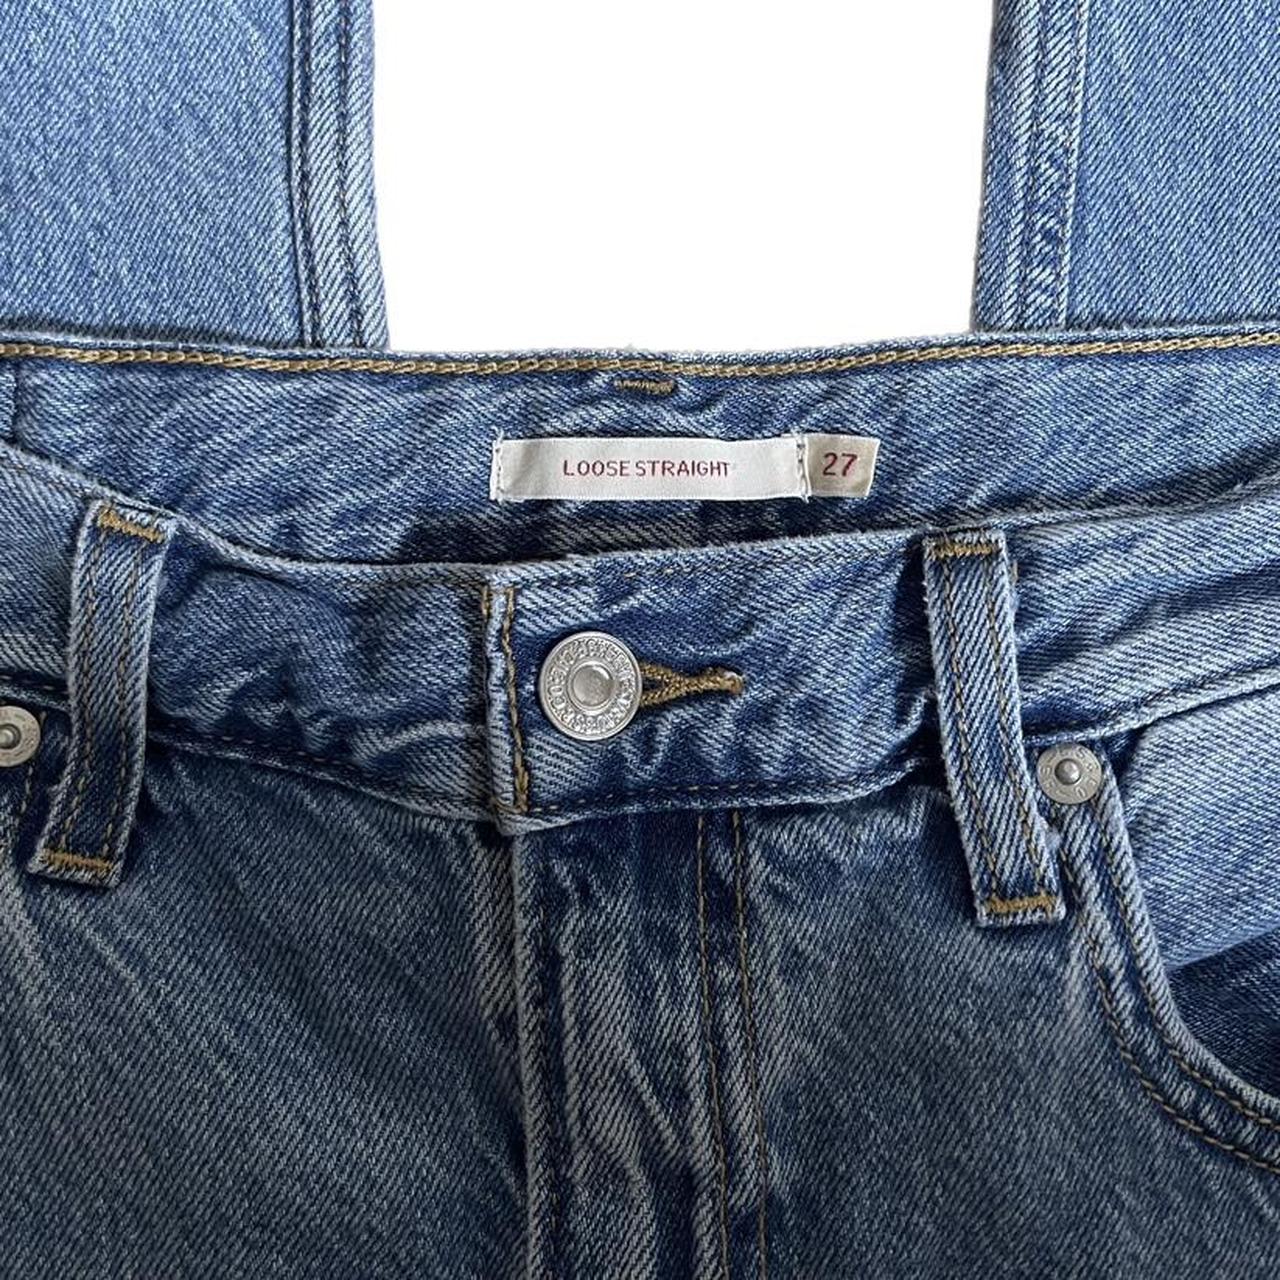 Loose Straight Women's Jeans - Medium Wash